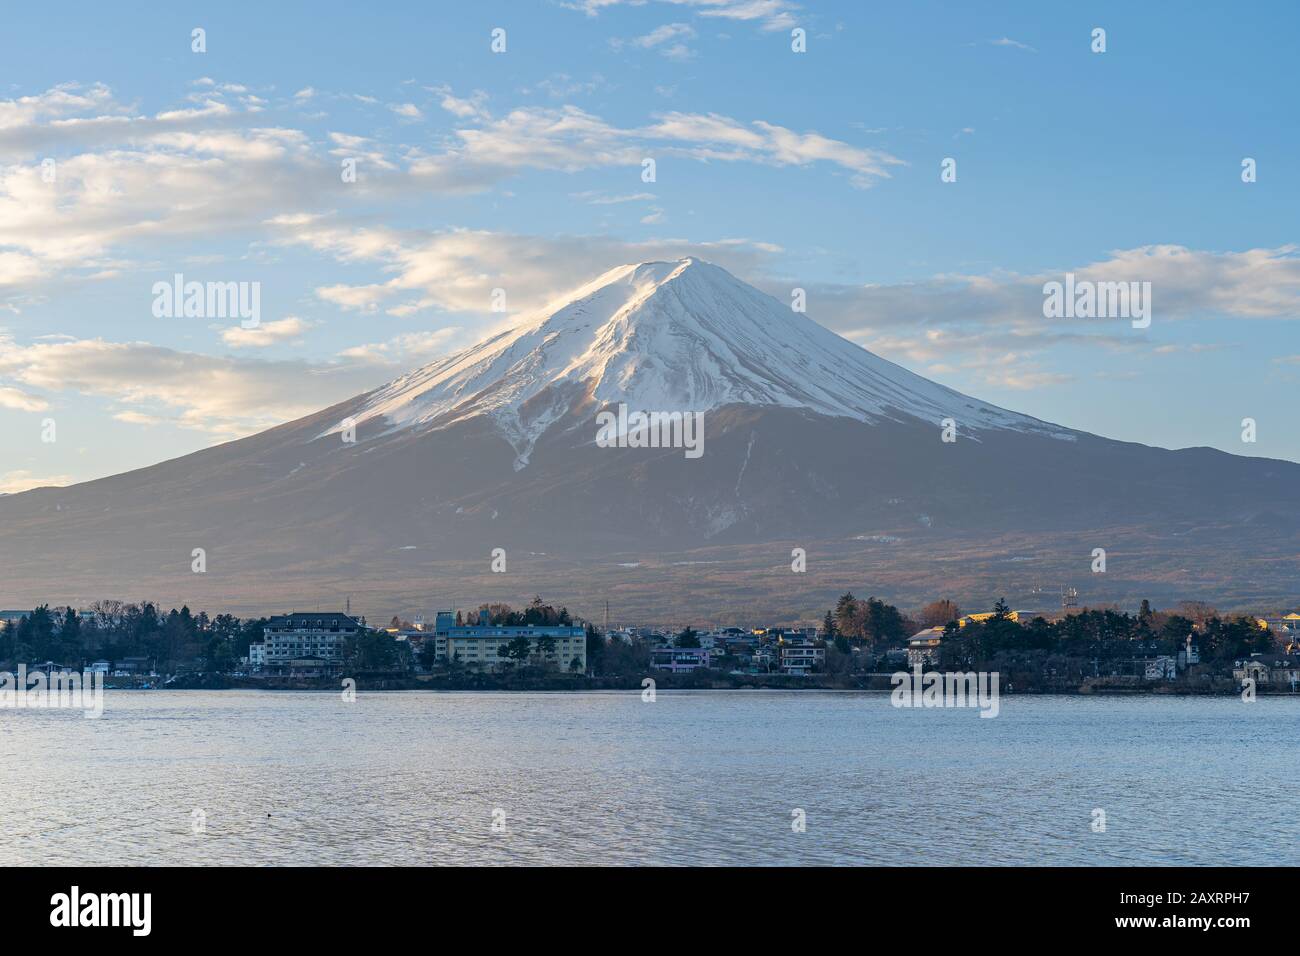 Close up view of Mount Fuji with Lake Kawaguchiko in Japan. Stock Photo